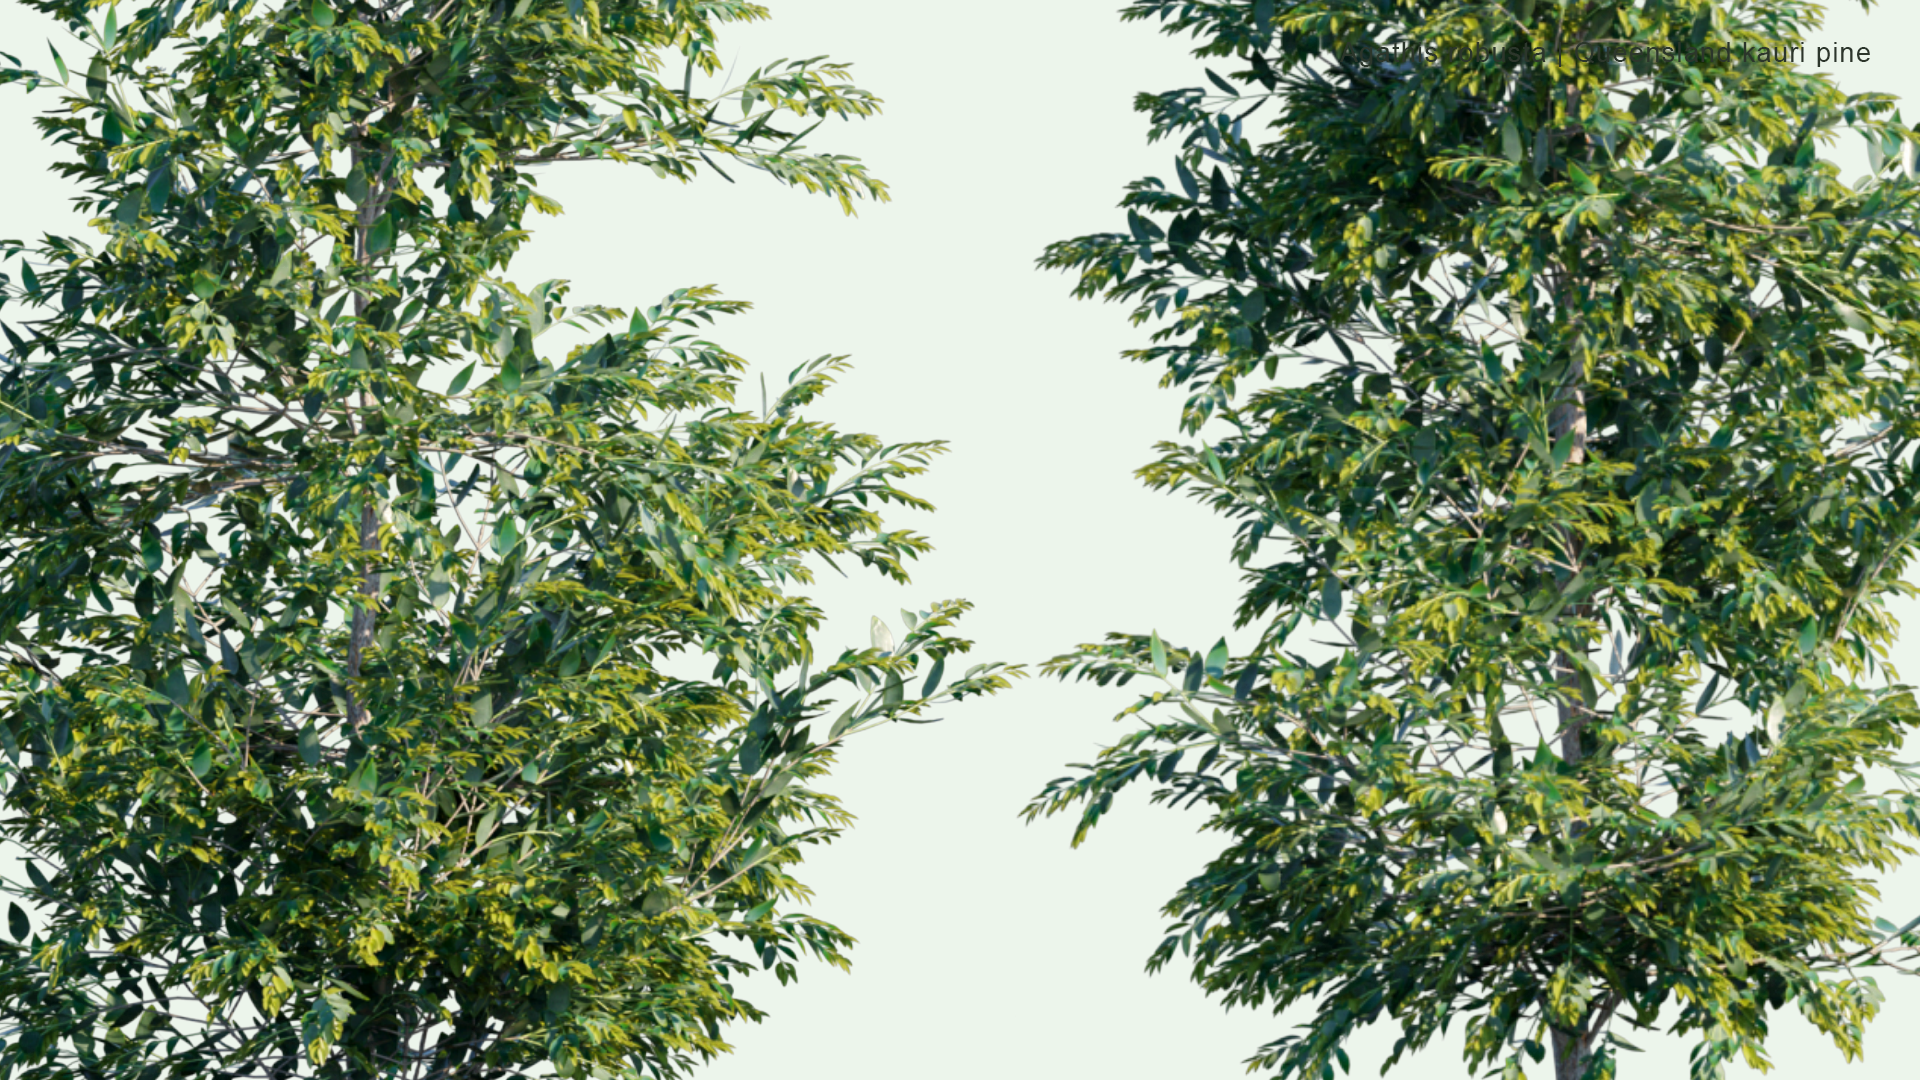 2D Agathis Robusta - Queensland Kauri Pine